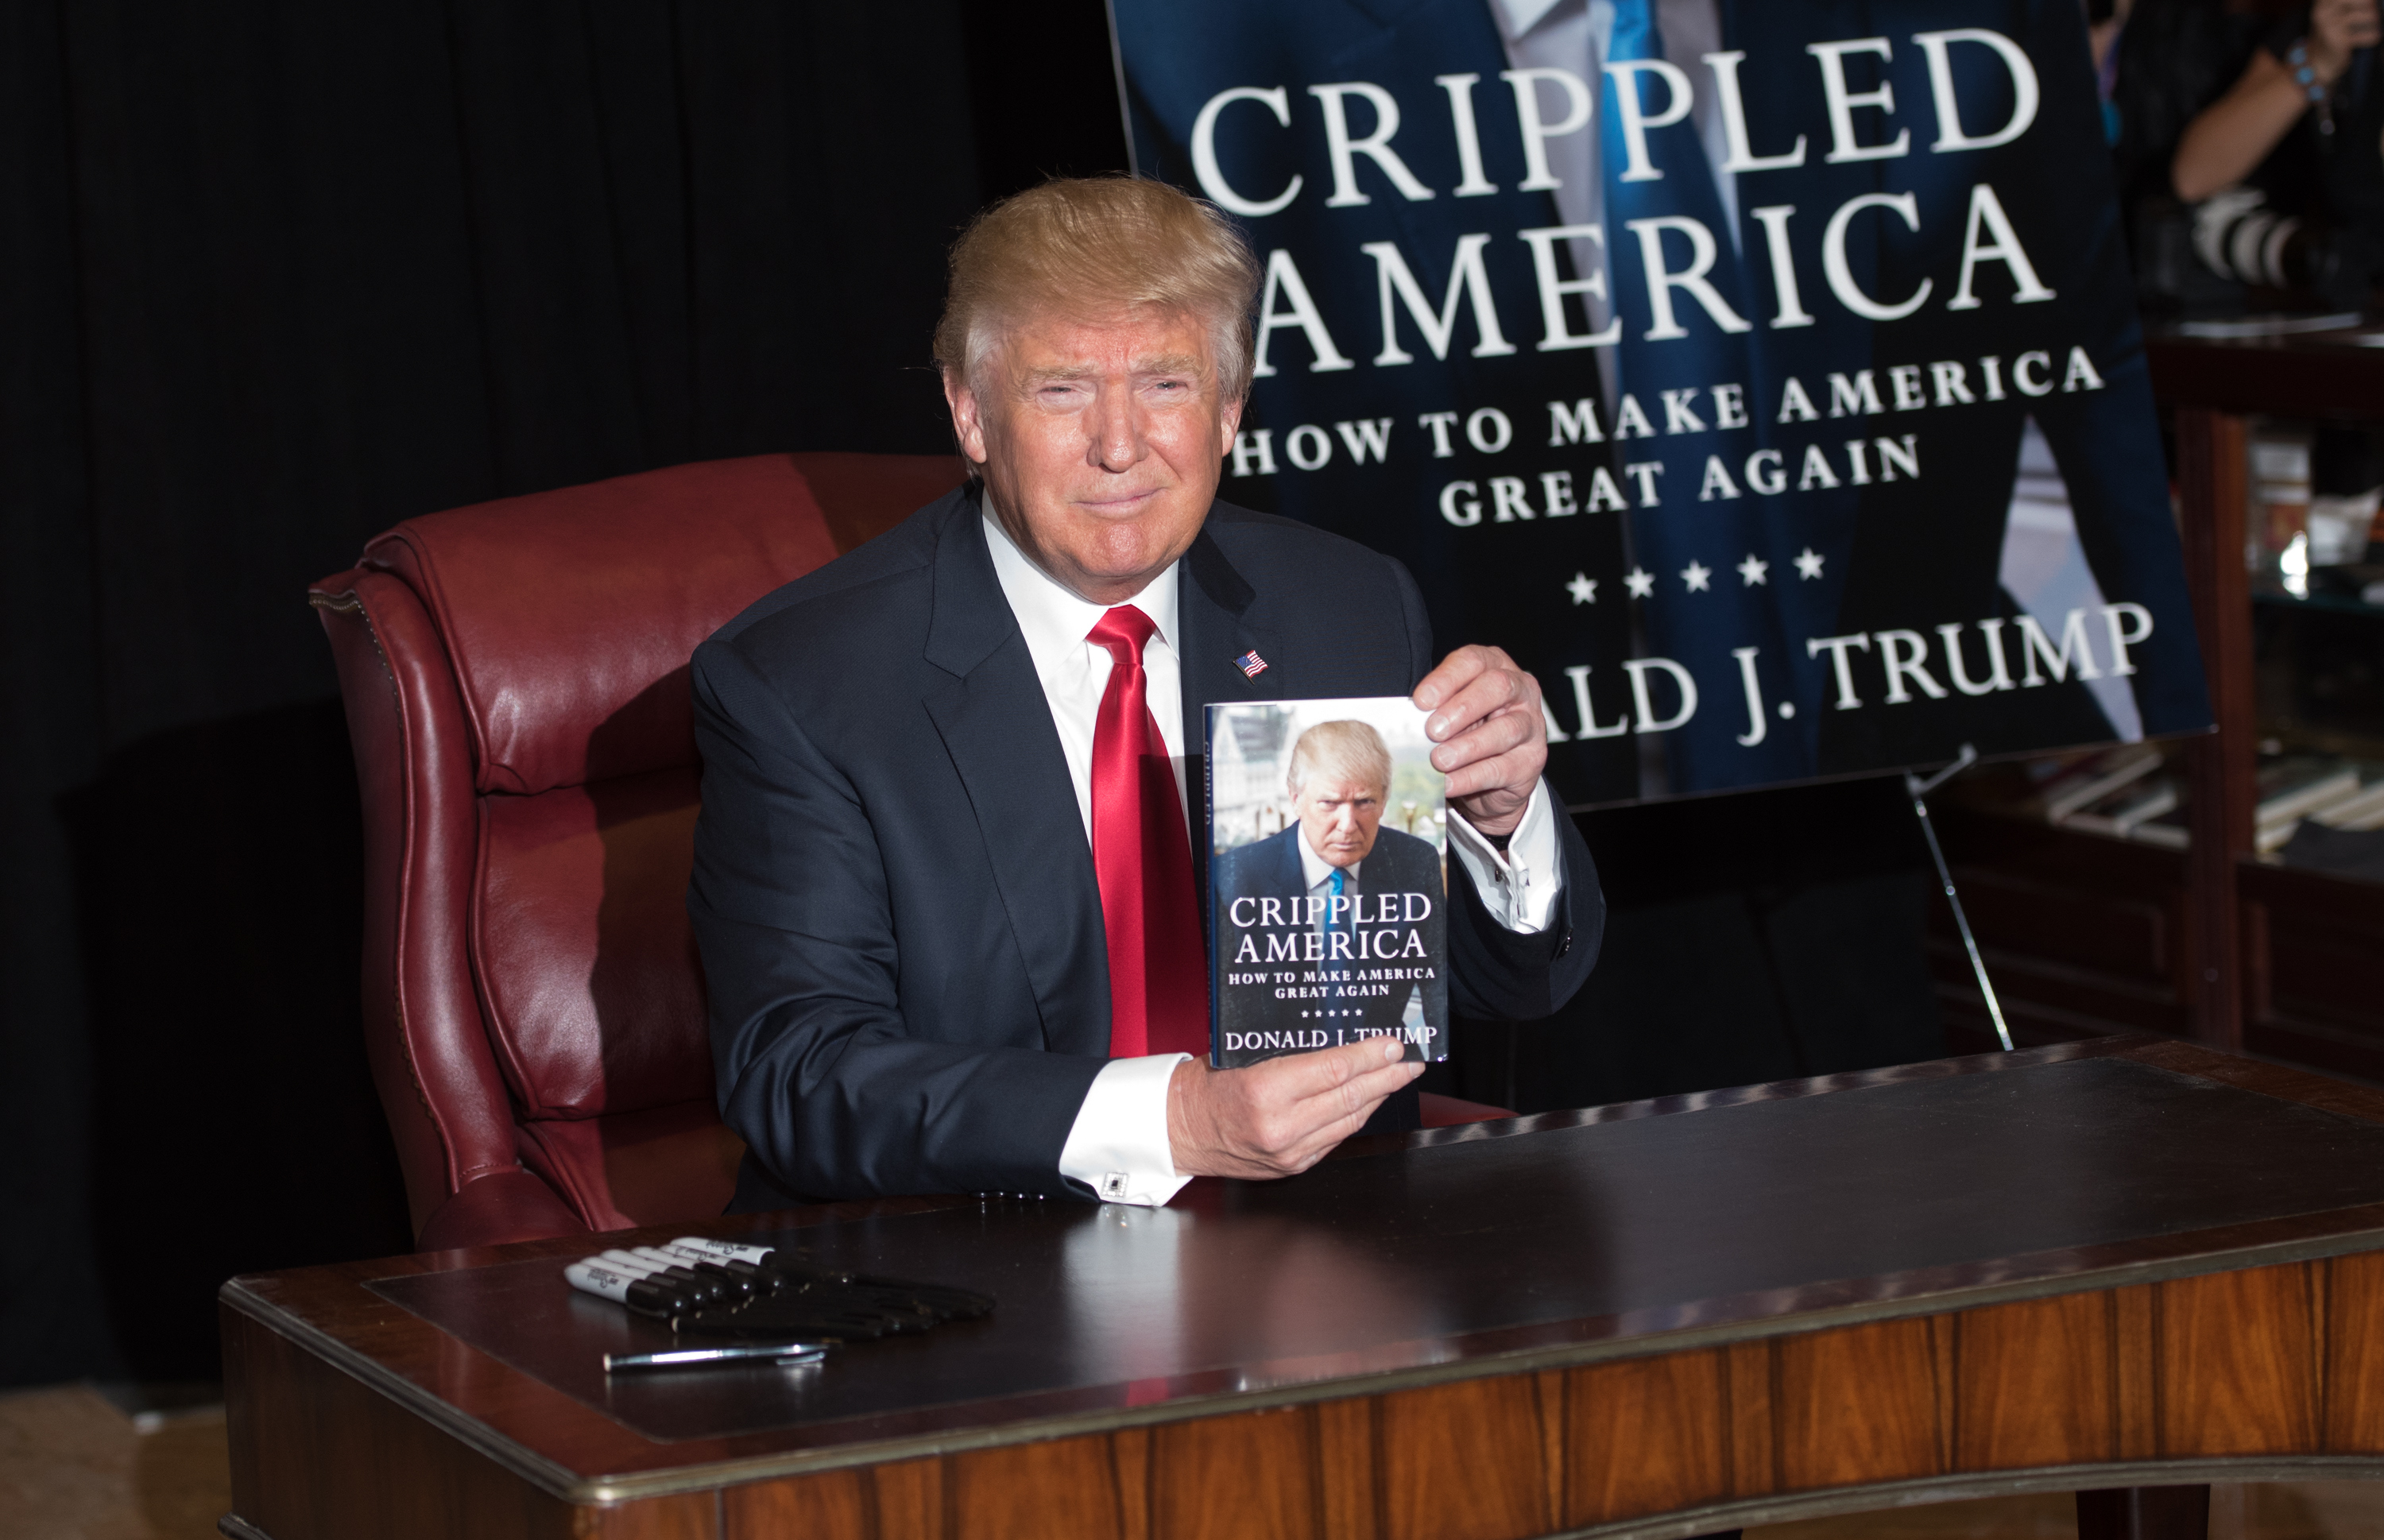 Donald Trump's "Crippled America" Book Press Conference